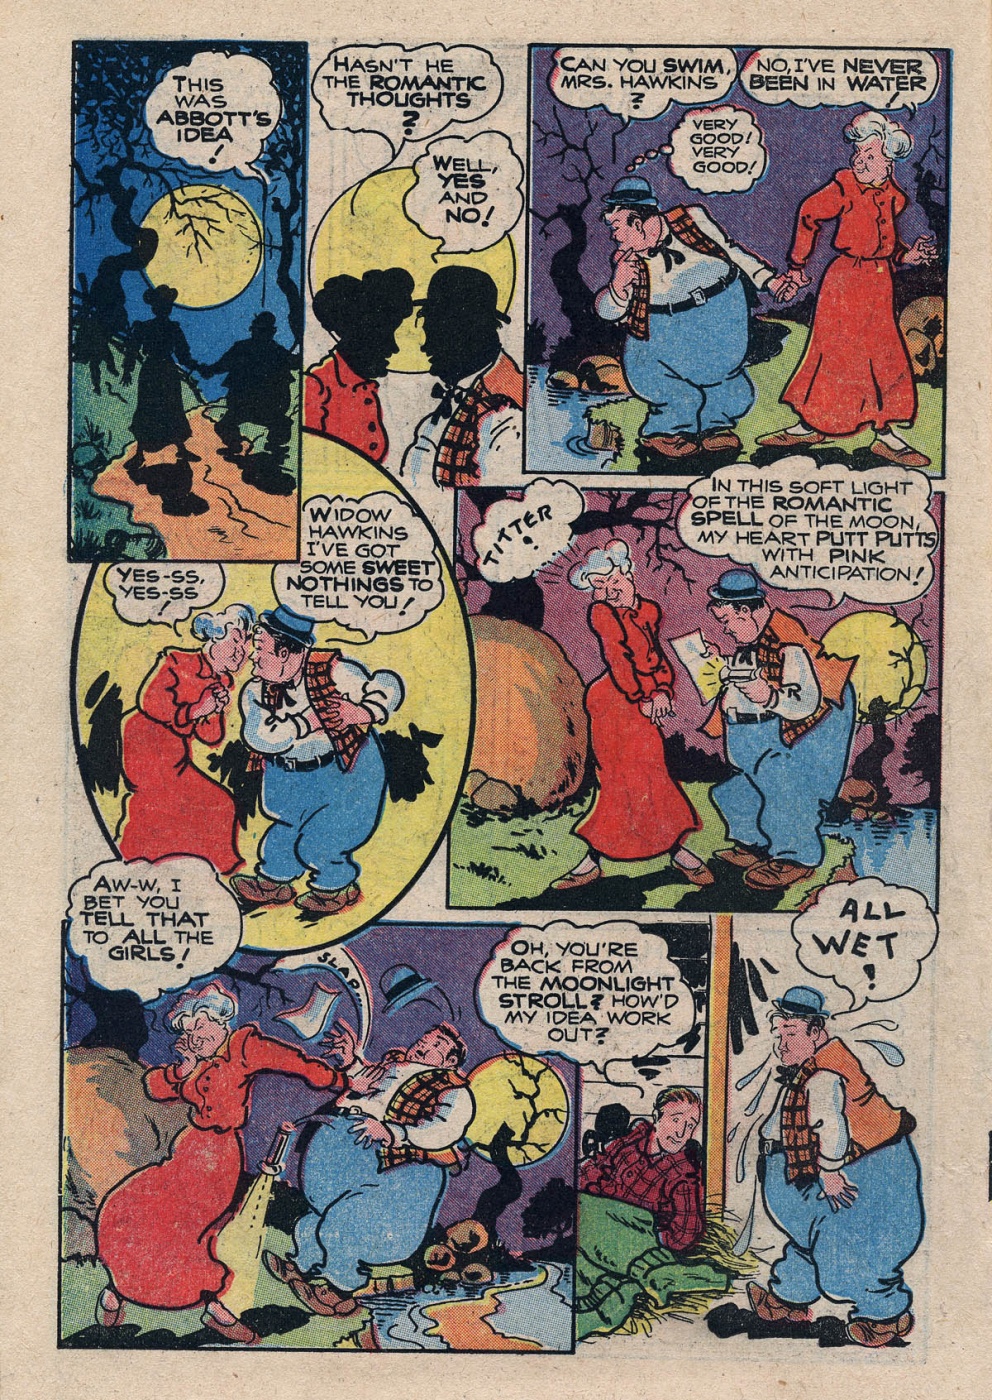 Funny Comic Strips - Abbott and Costello 001 (Feb 1948) 22